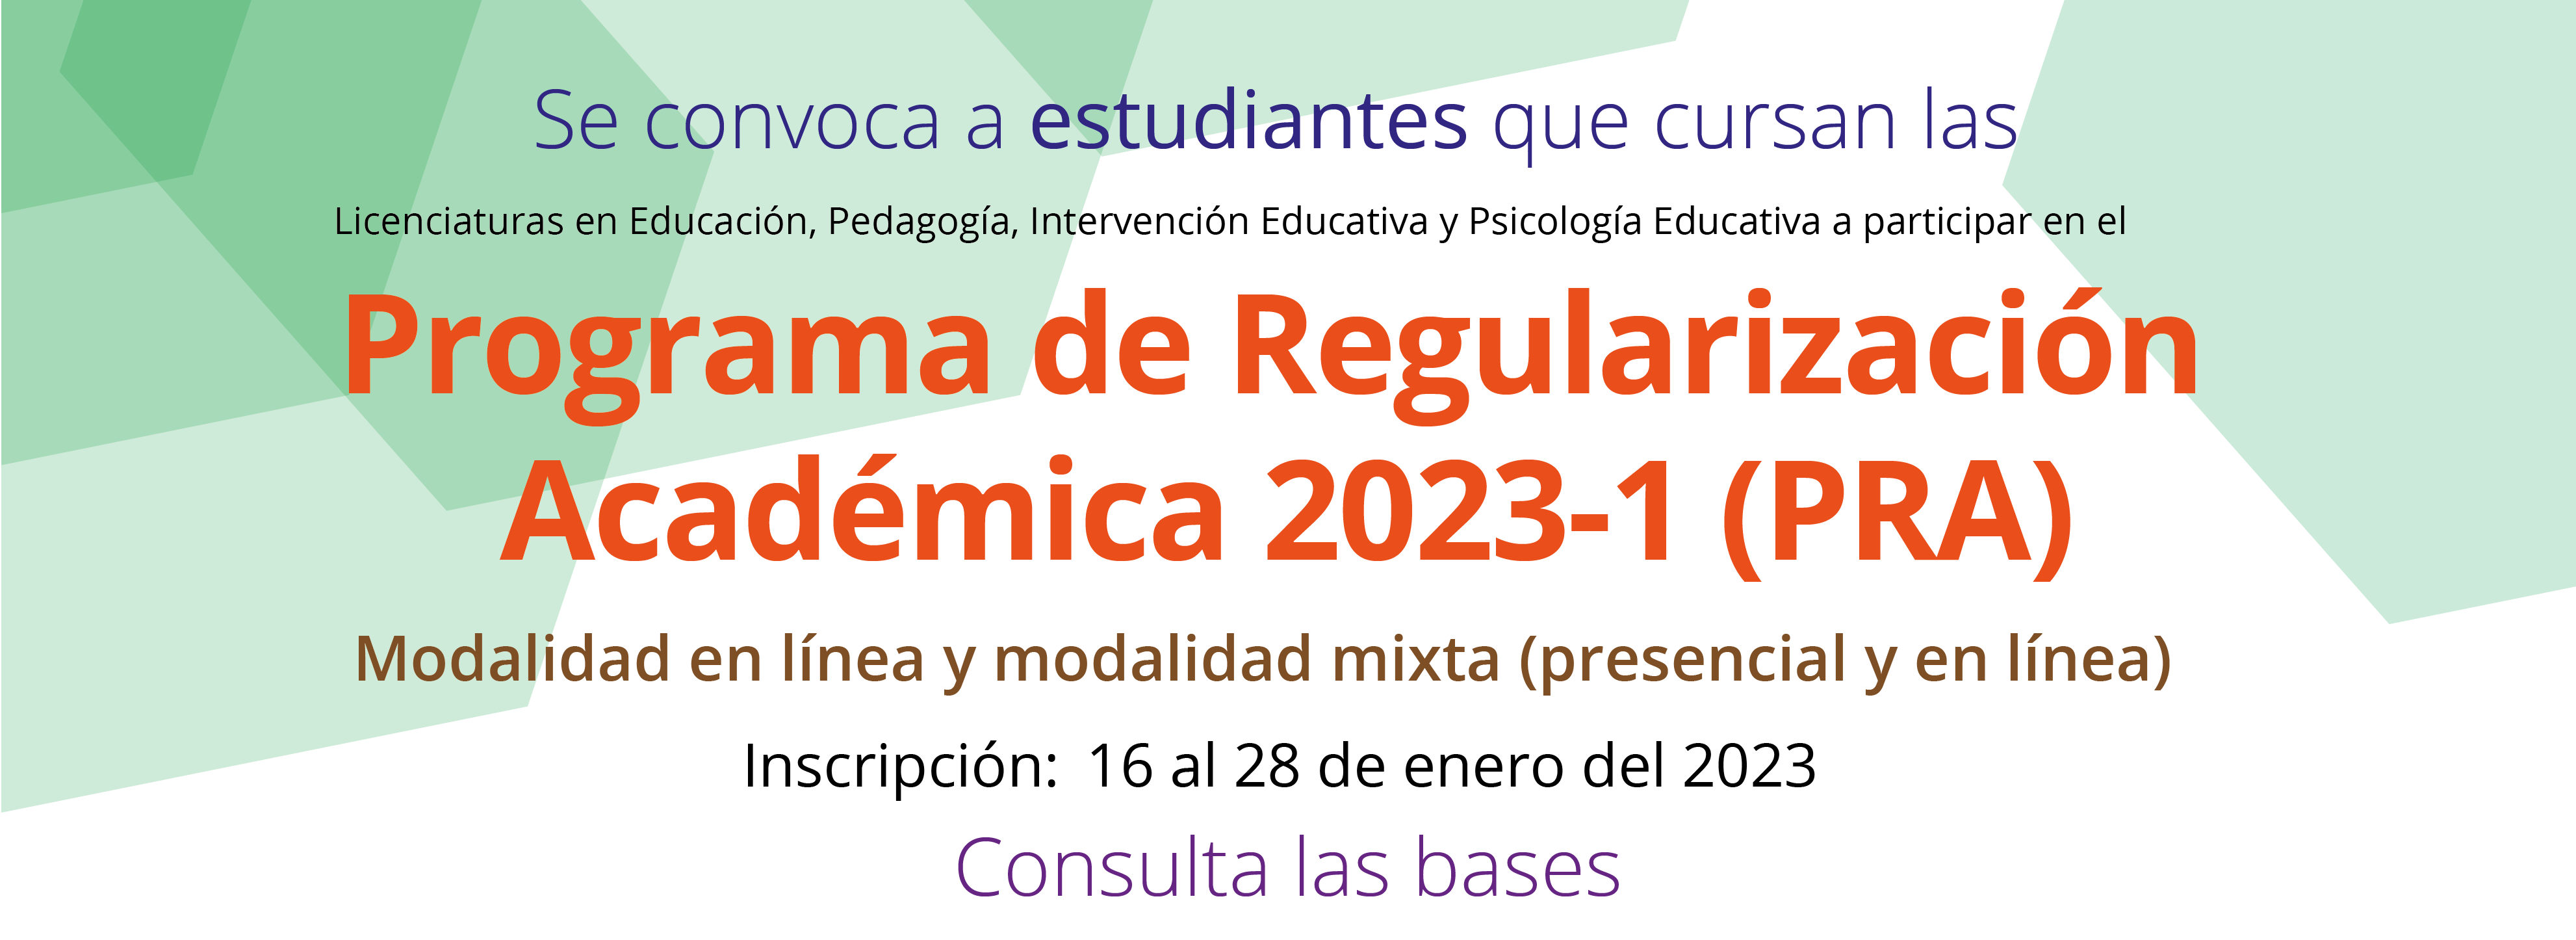 Convocatoria_Programa_de_Regularizacion_Academica_2023-1_PRA_Estudiantes_banner_web